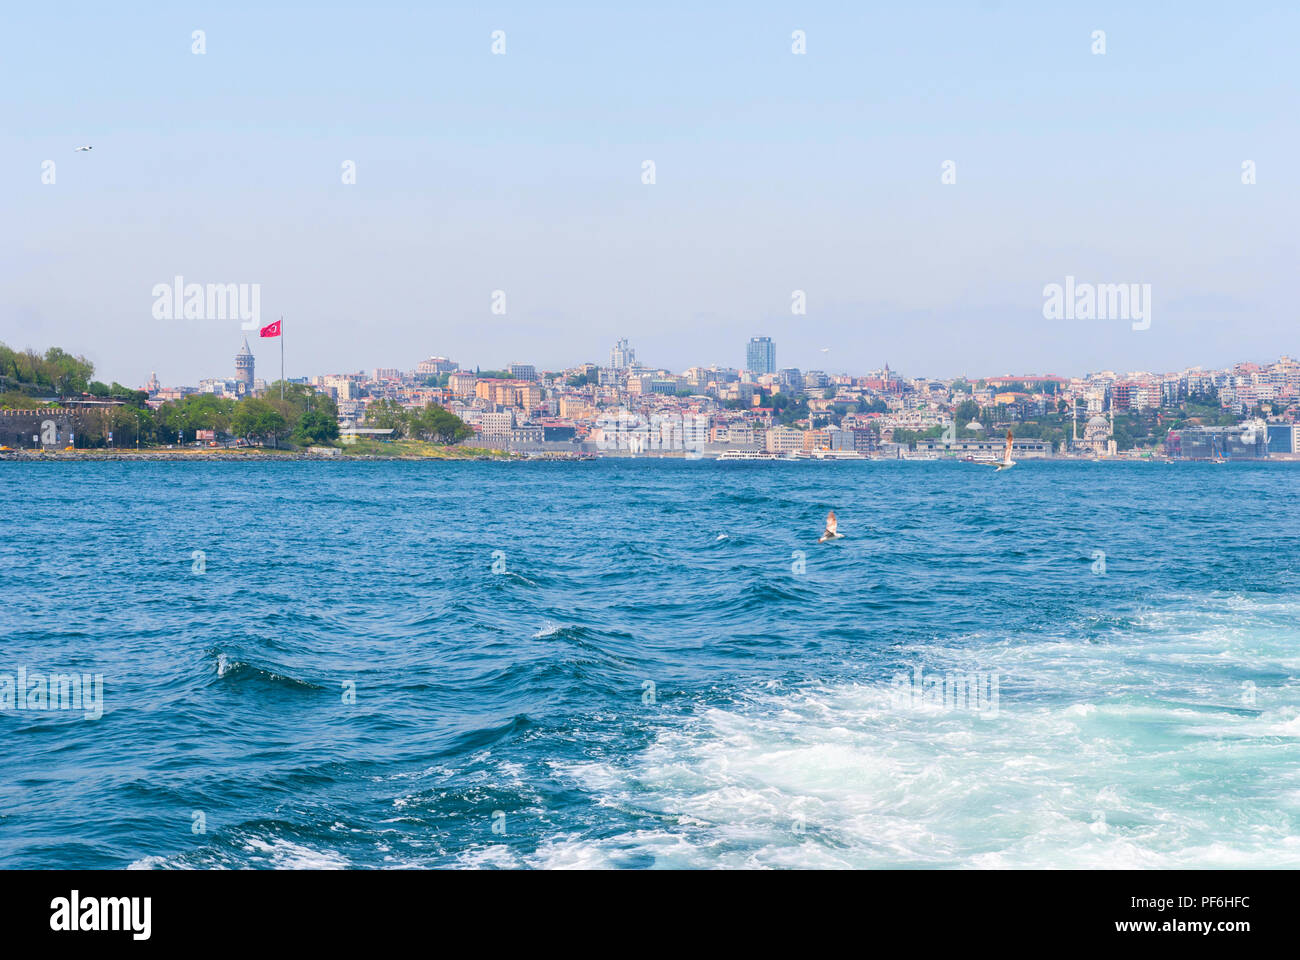 Ferry de pasajeros barco transporta gente cruzando el Bósforo Estambul Foto de stock